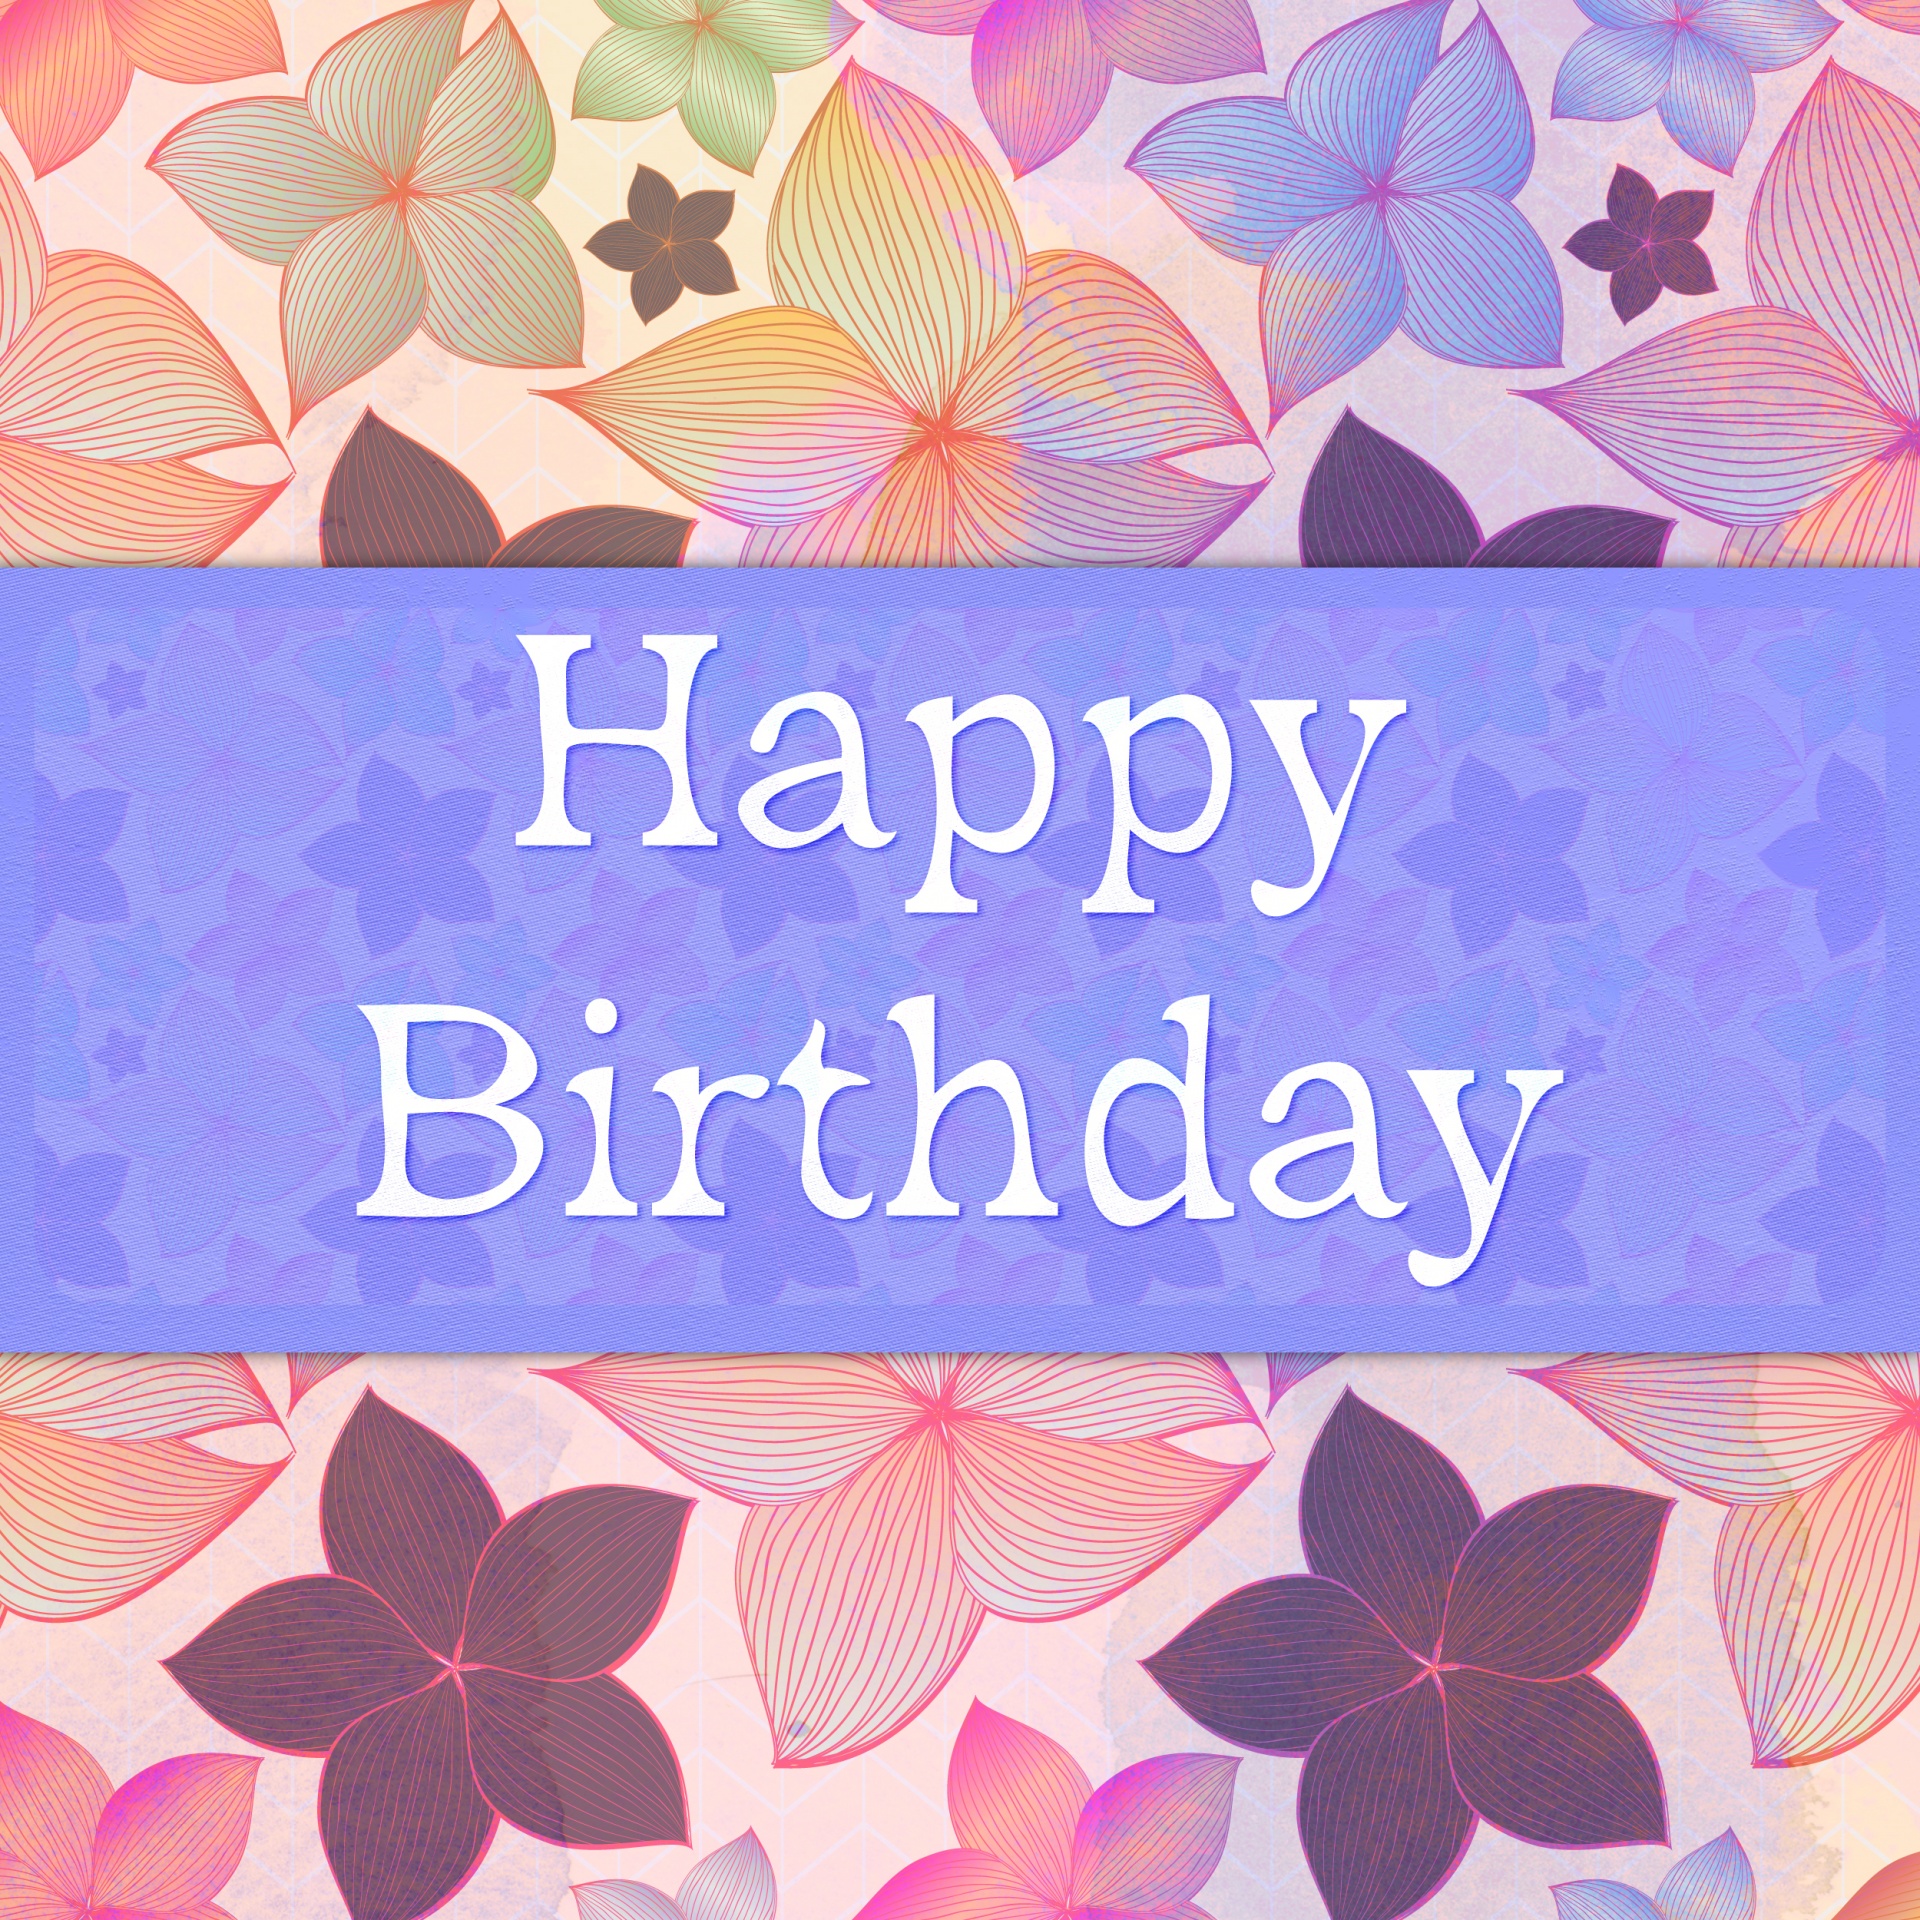 happy-birthday-card-pattern-flowers-free-stock-photo-public-domain